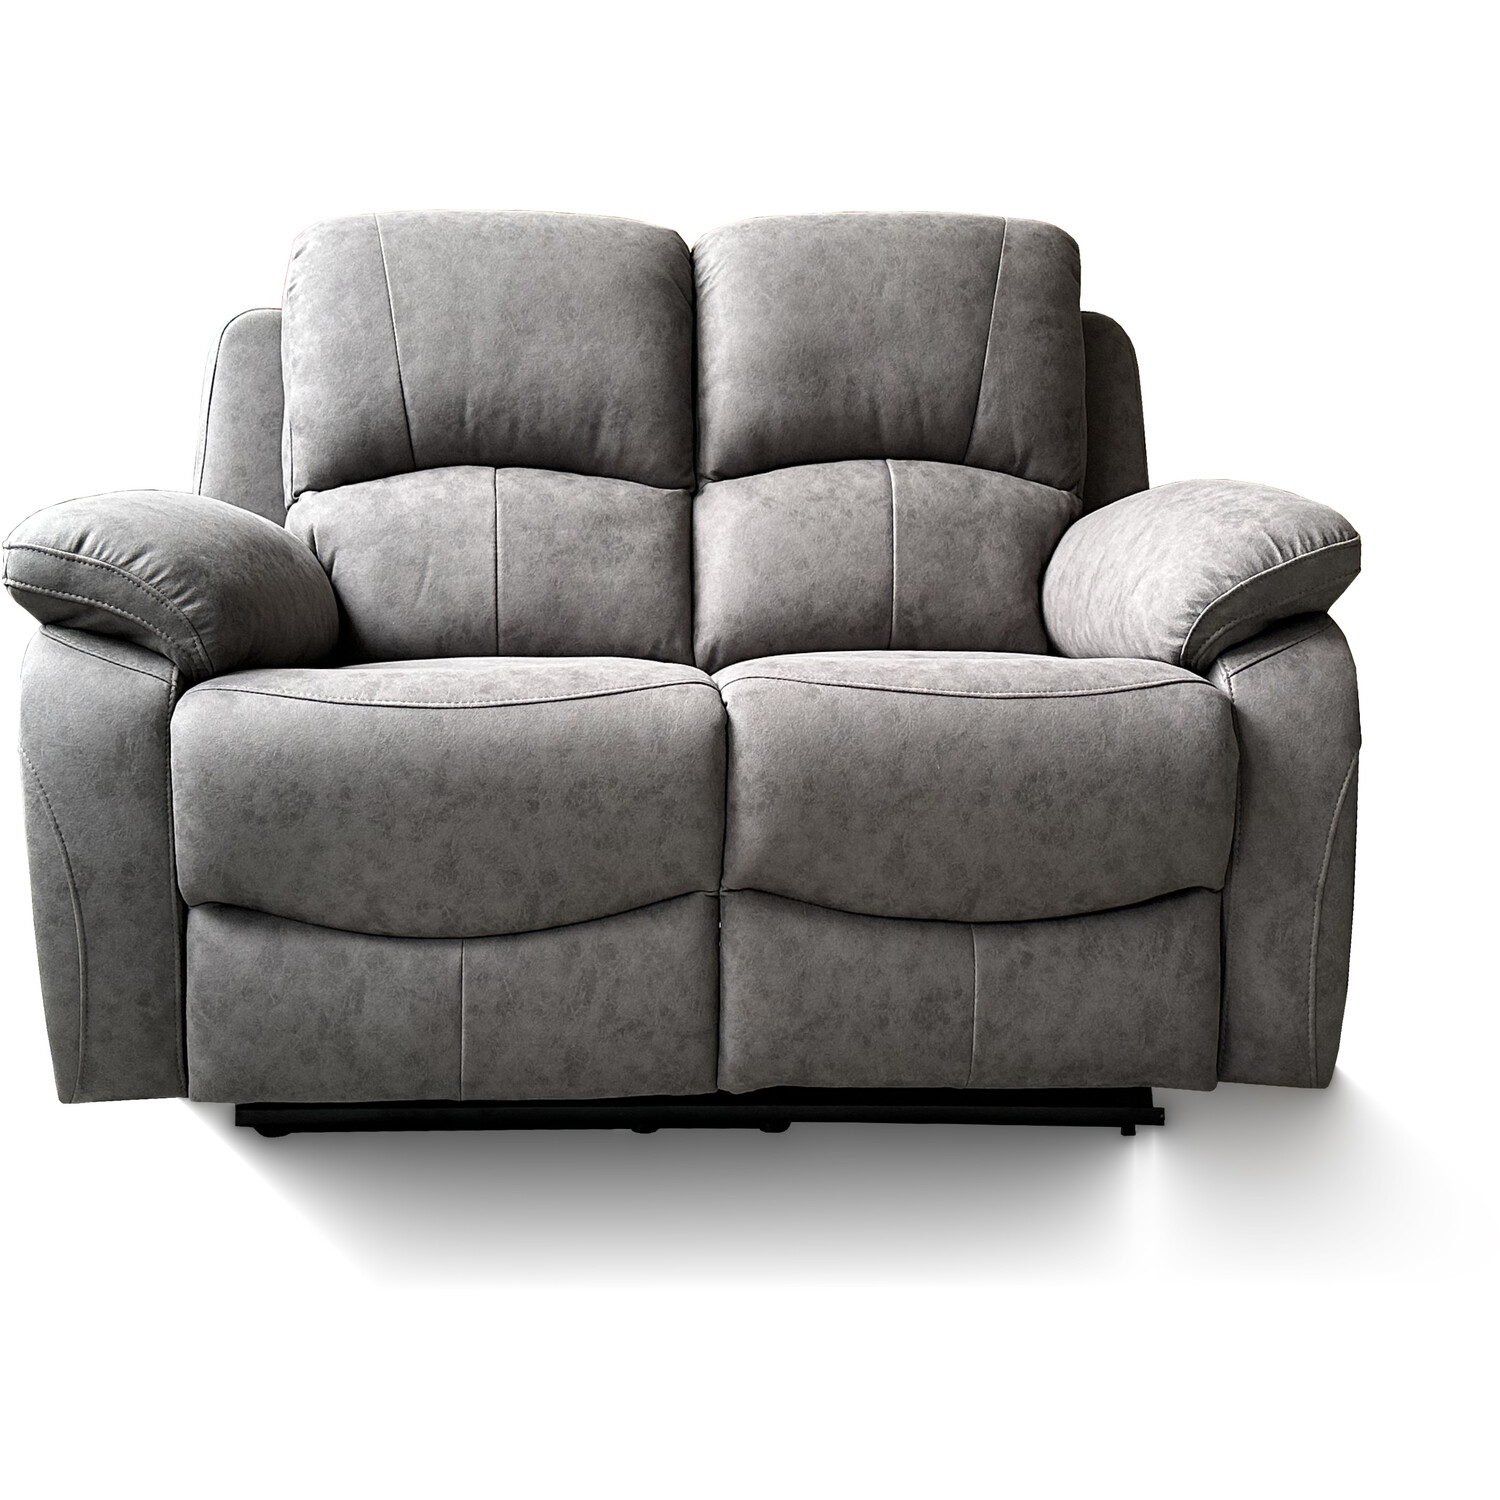 Milano 2 Seater Charcoal Fabric Manual Recliner Sofa Image 3